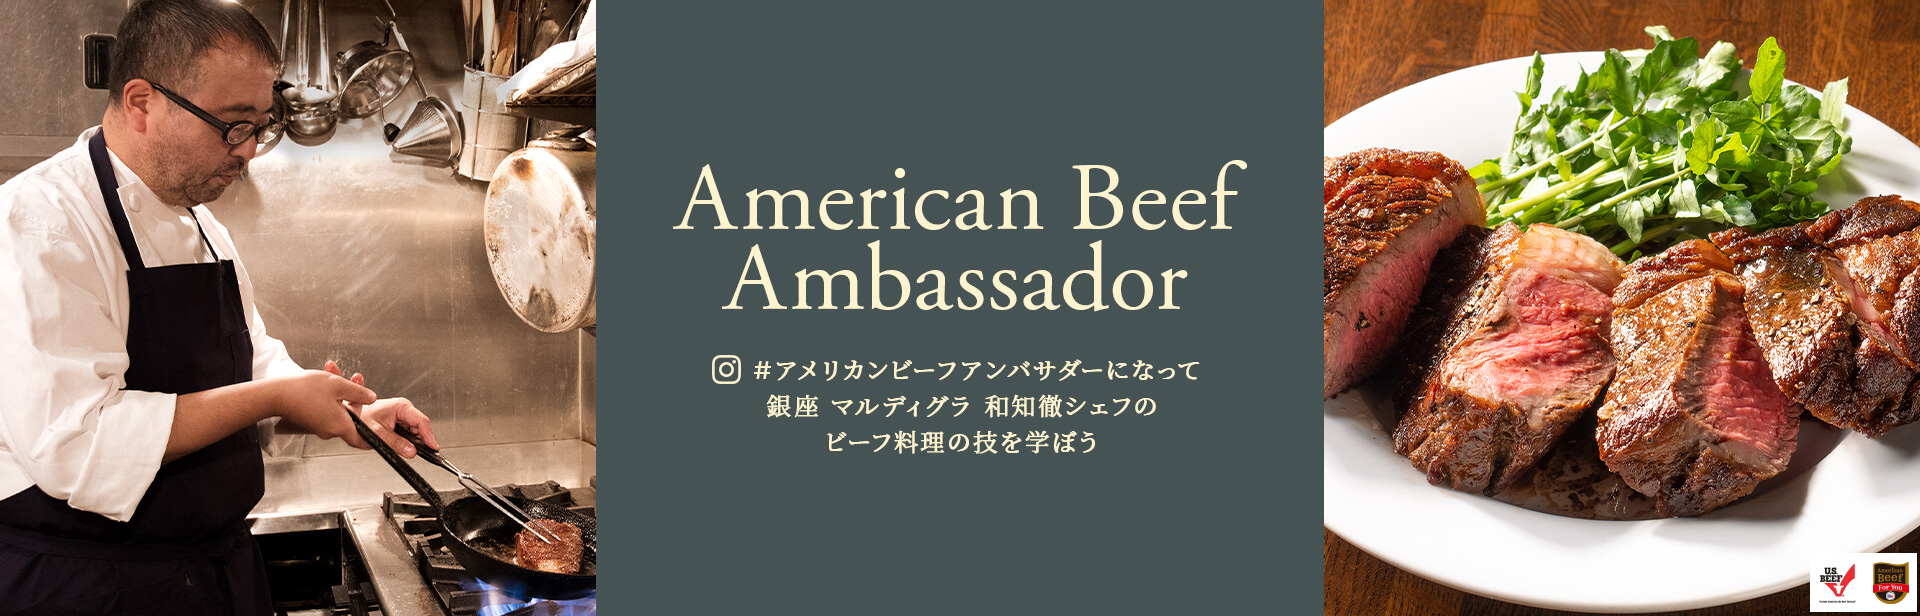 American Beef Ambassador #アメリカンビーフアンバサダーになって銀座 マルディグラ 和知徹シェフのビーフ料理の技を学ぼう